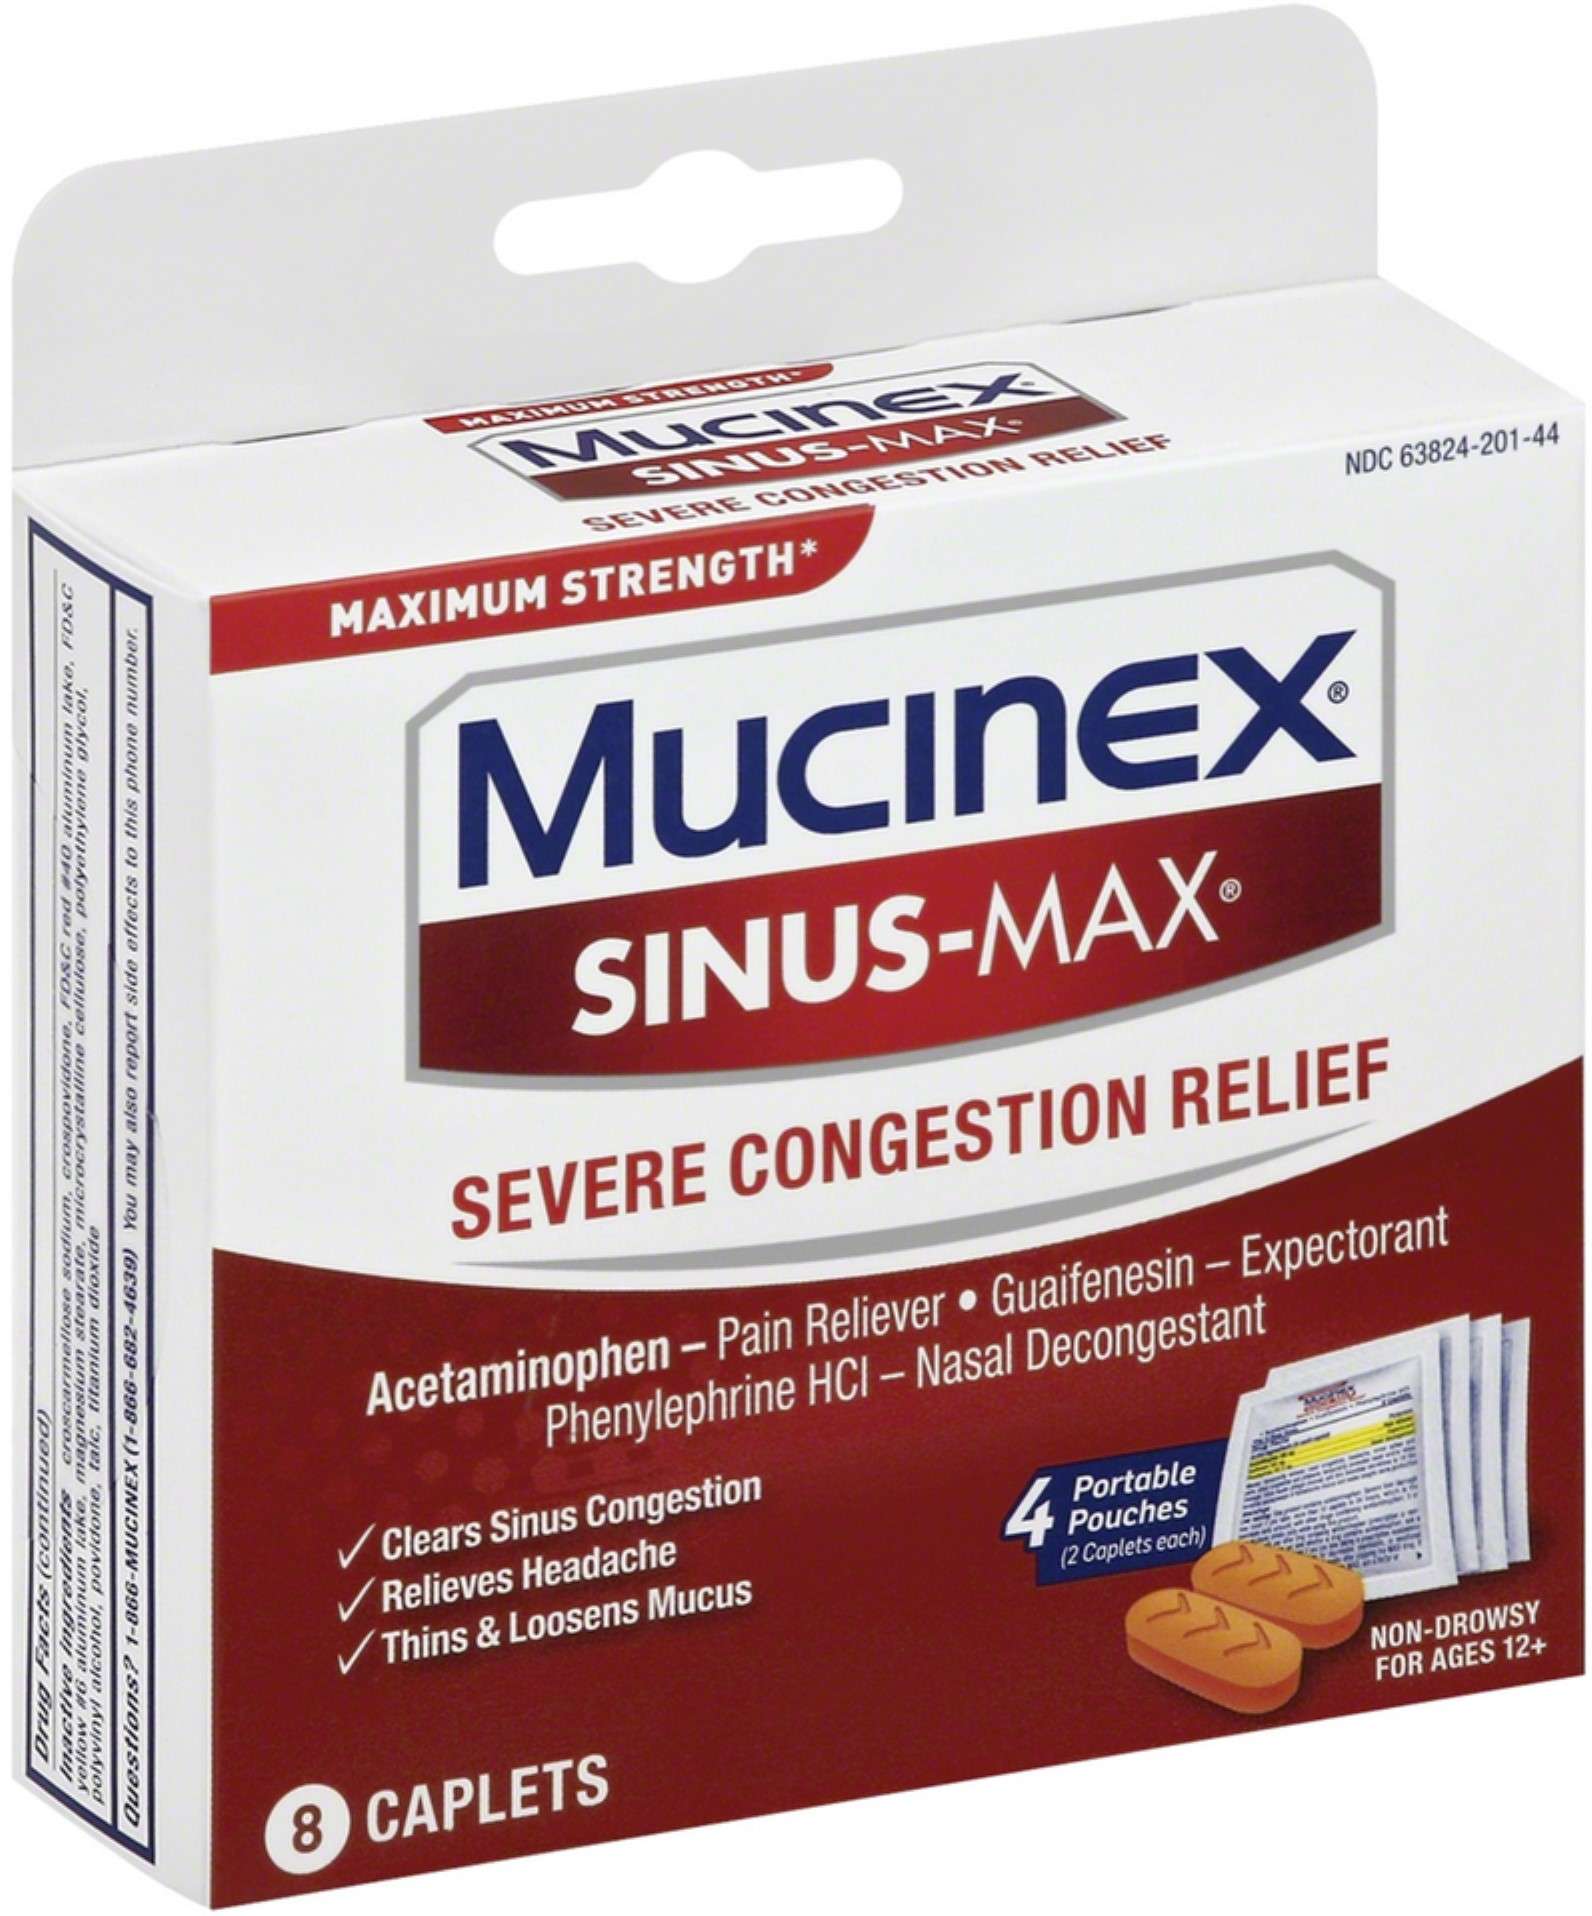 Will Mucinex Help With Sinus Congestion